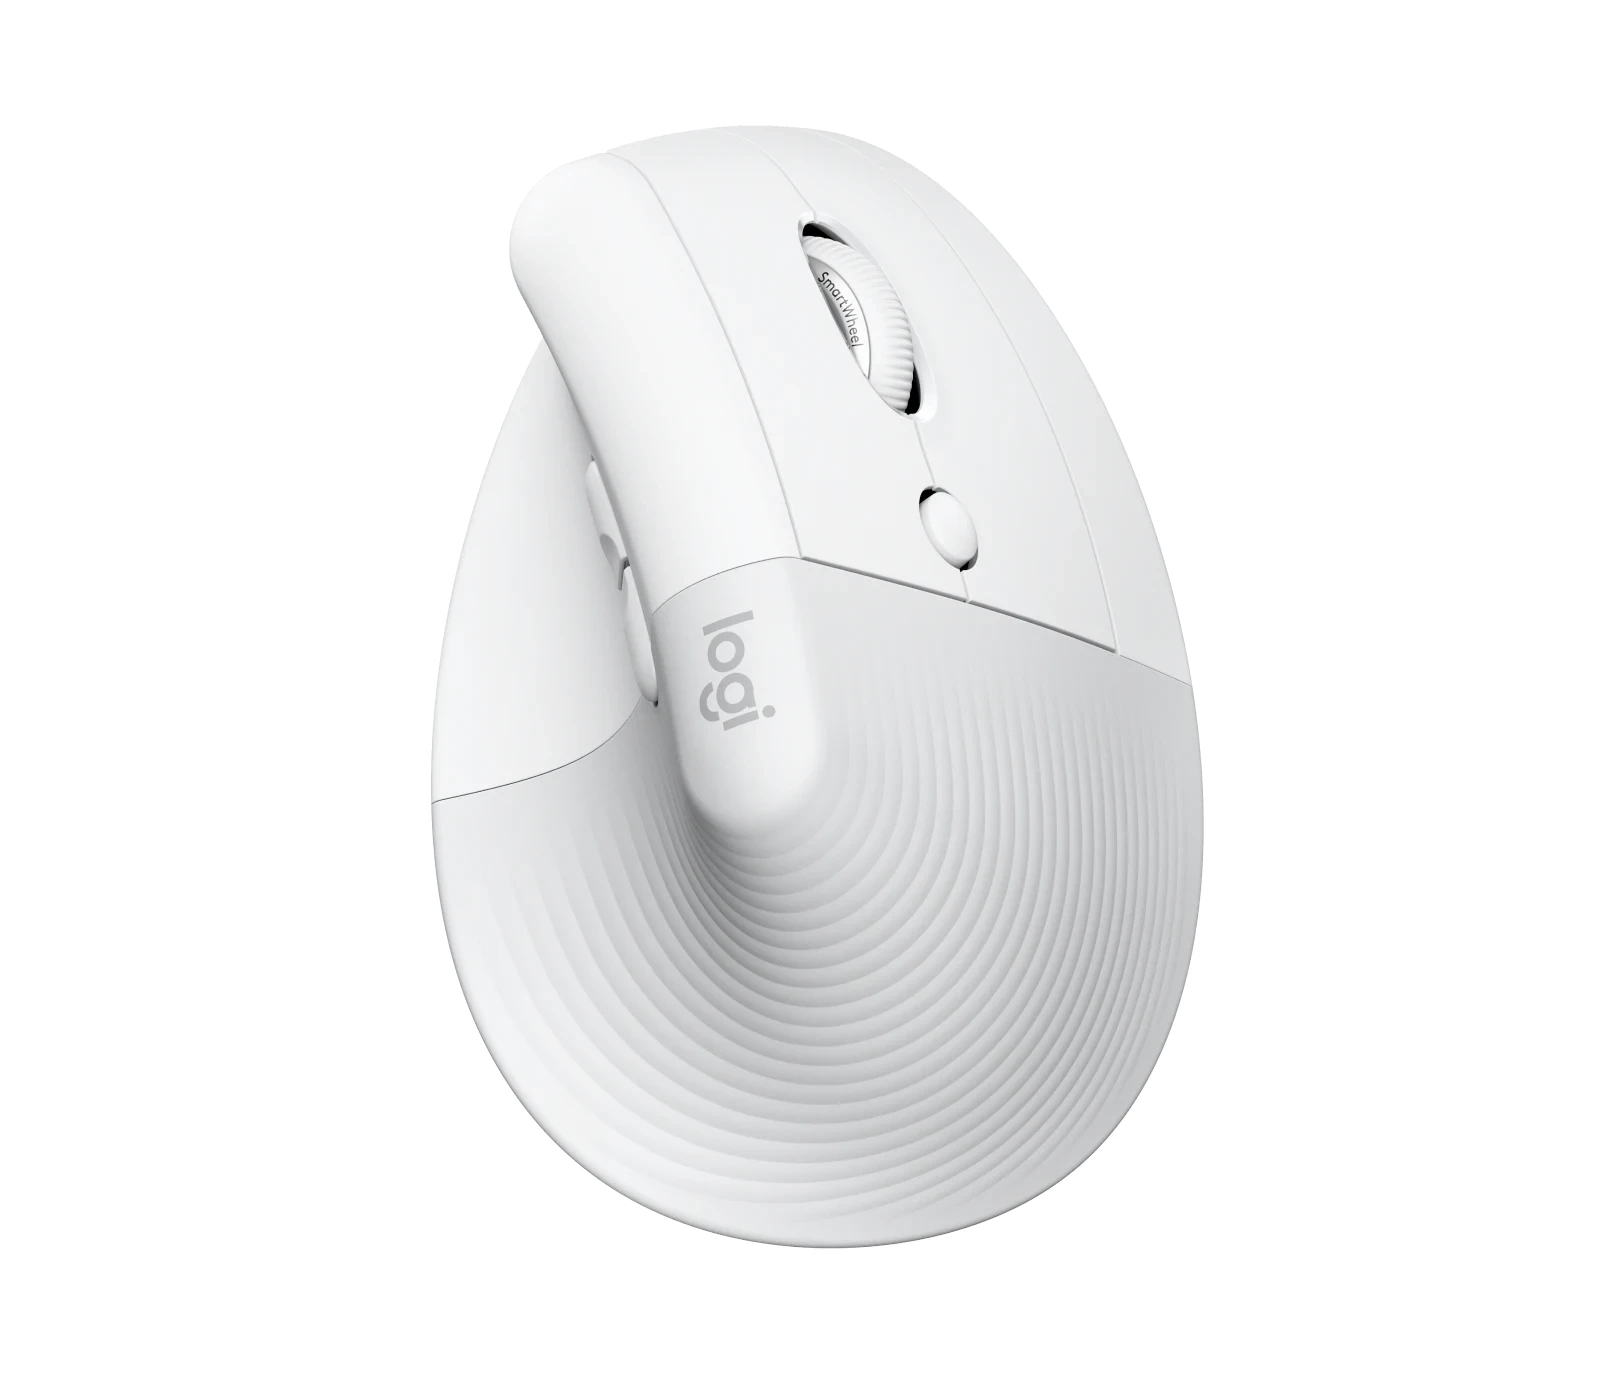 Logitech Lift Vertical Ergonomic Wireless Mouse (Pale Grey)